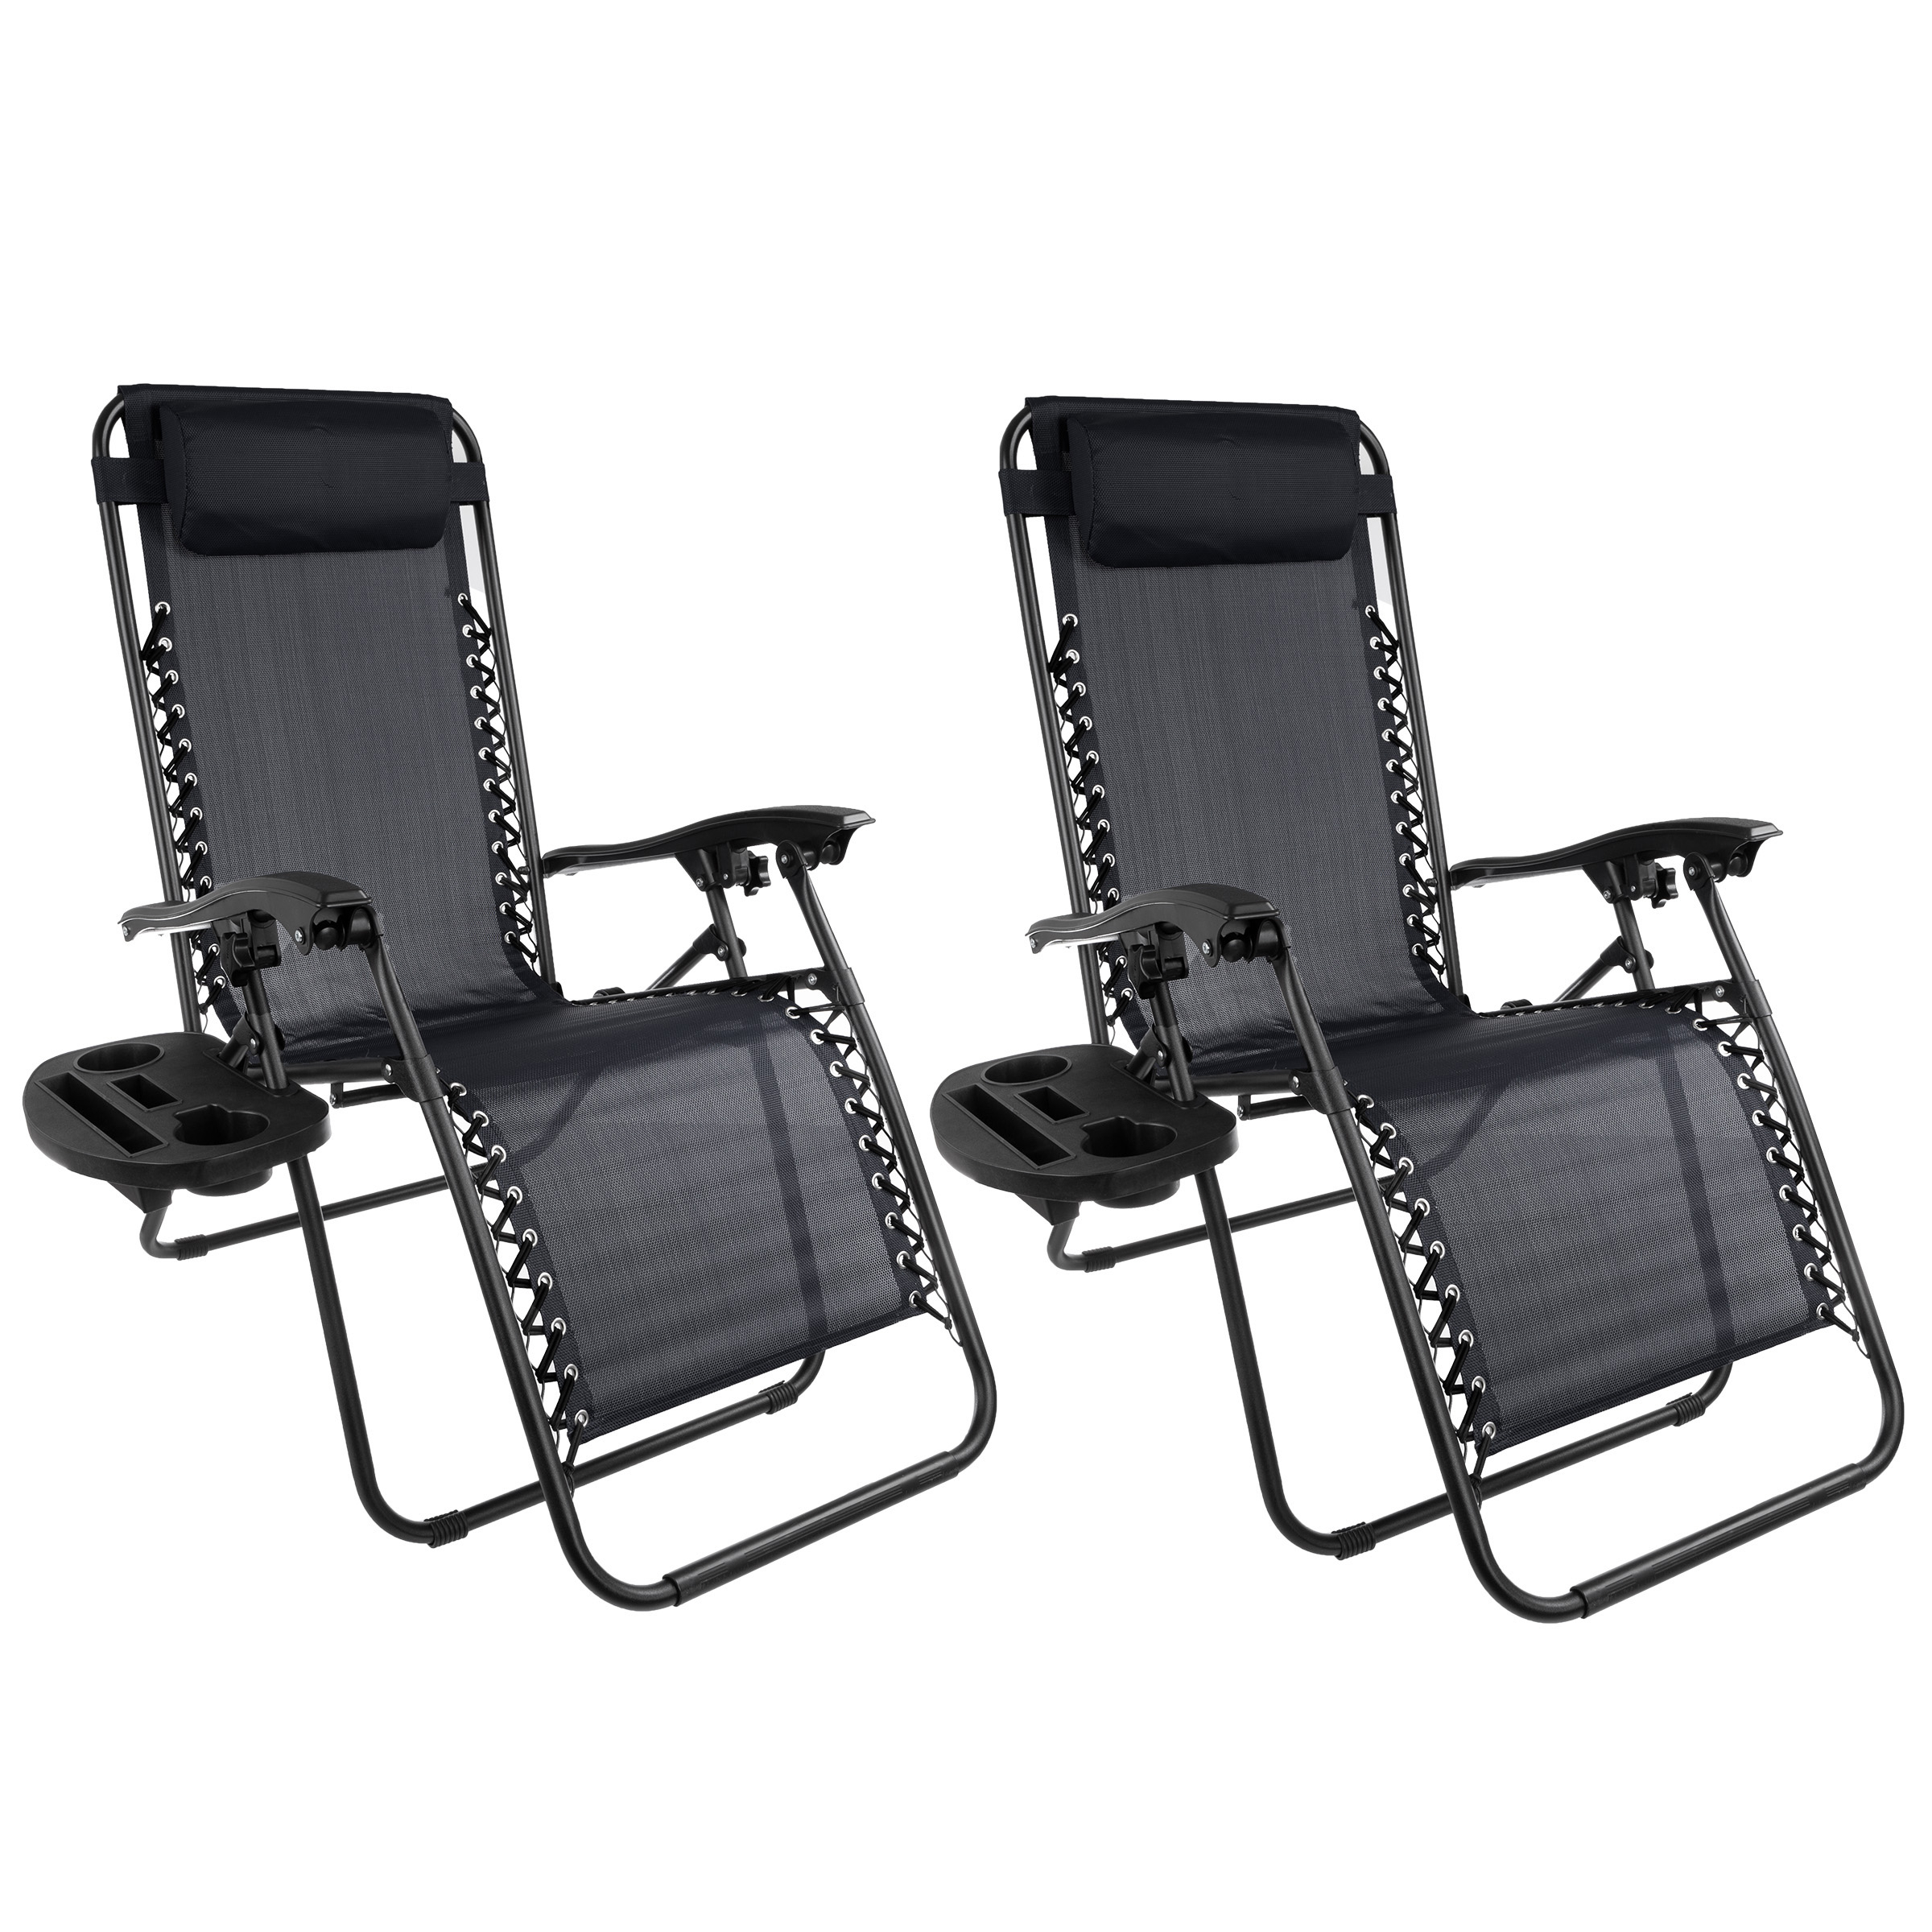 2 Pack Backyard Beach Patio Folding Lounging Chairs Holds 300 Pounds - Black